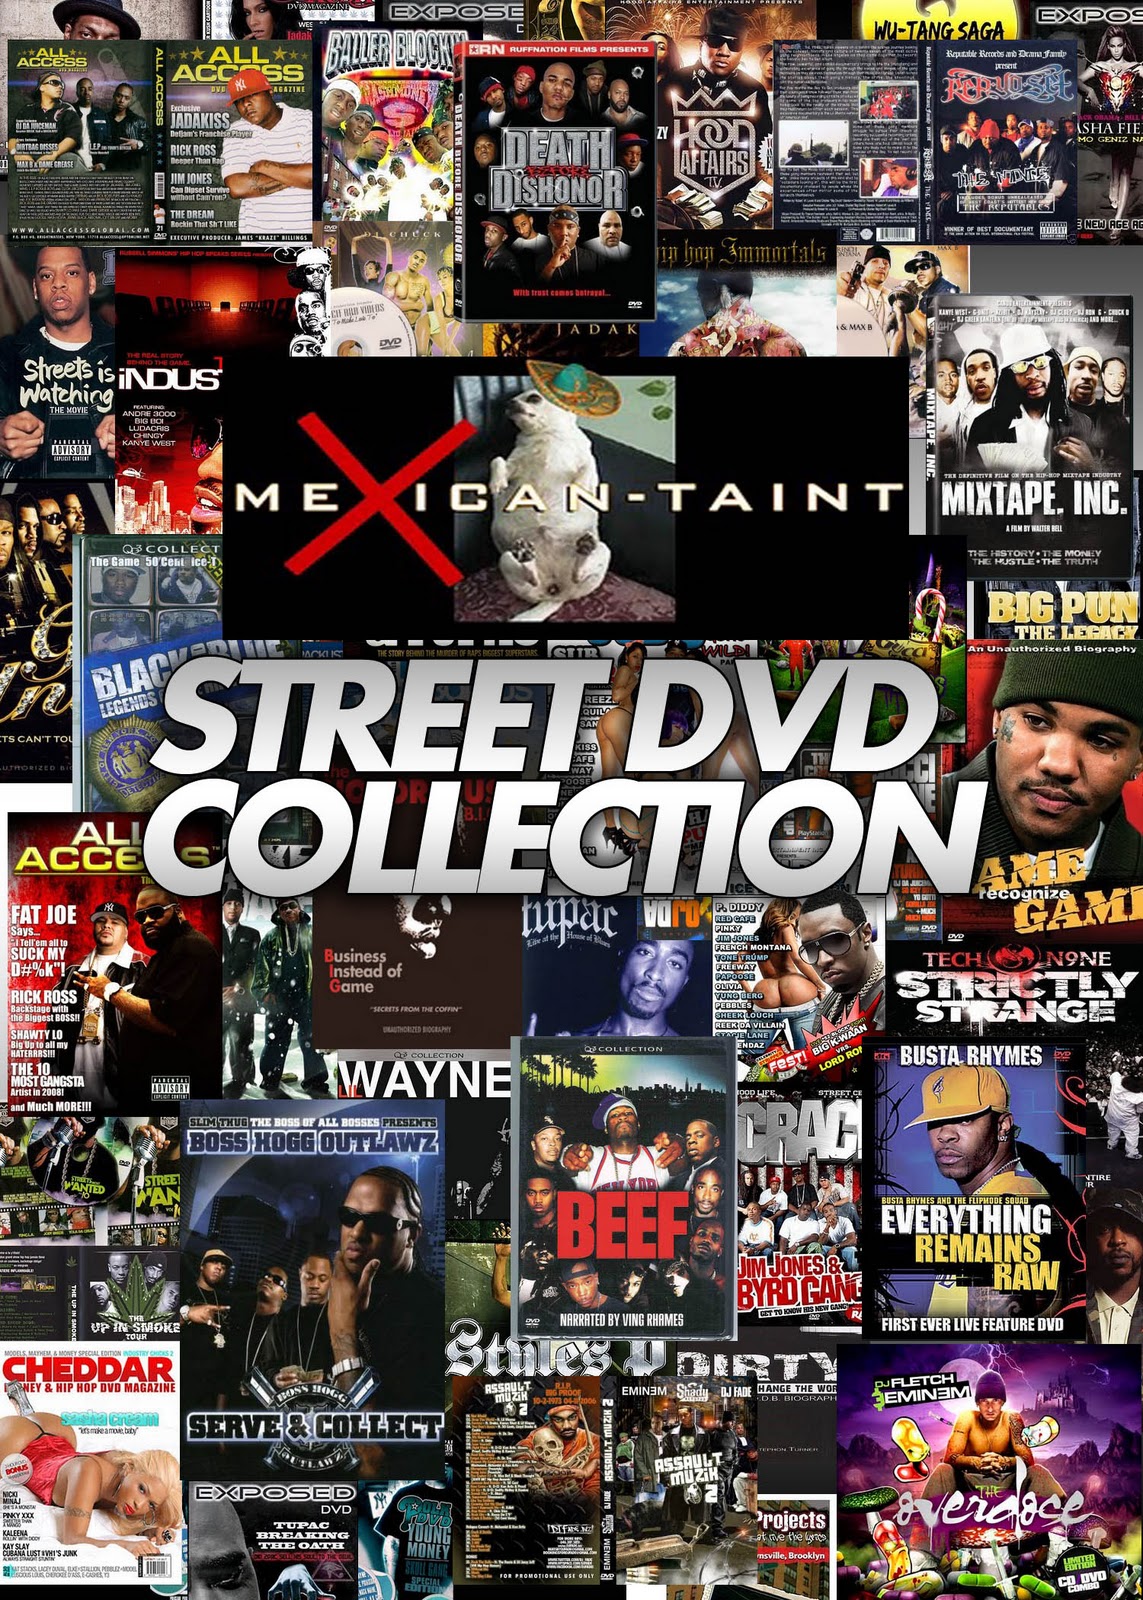 http://2.bp.blogspot.com/-YVjwdlpXrlU/TnX3B0_okdI/AAAAAAAAMZU/wlvnFhts8mE/s1600/Street-DVD-Collection.jpg